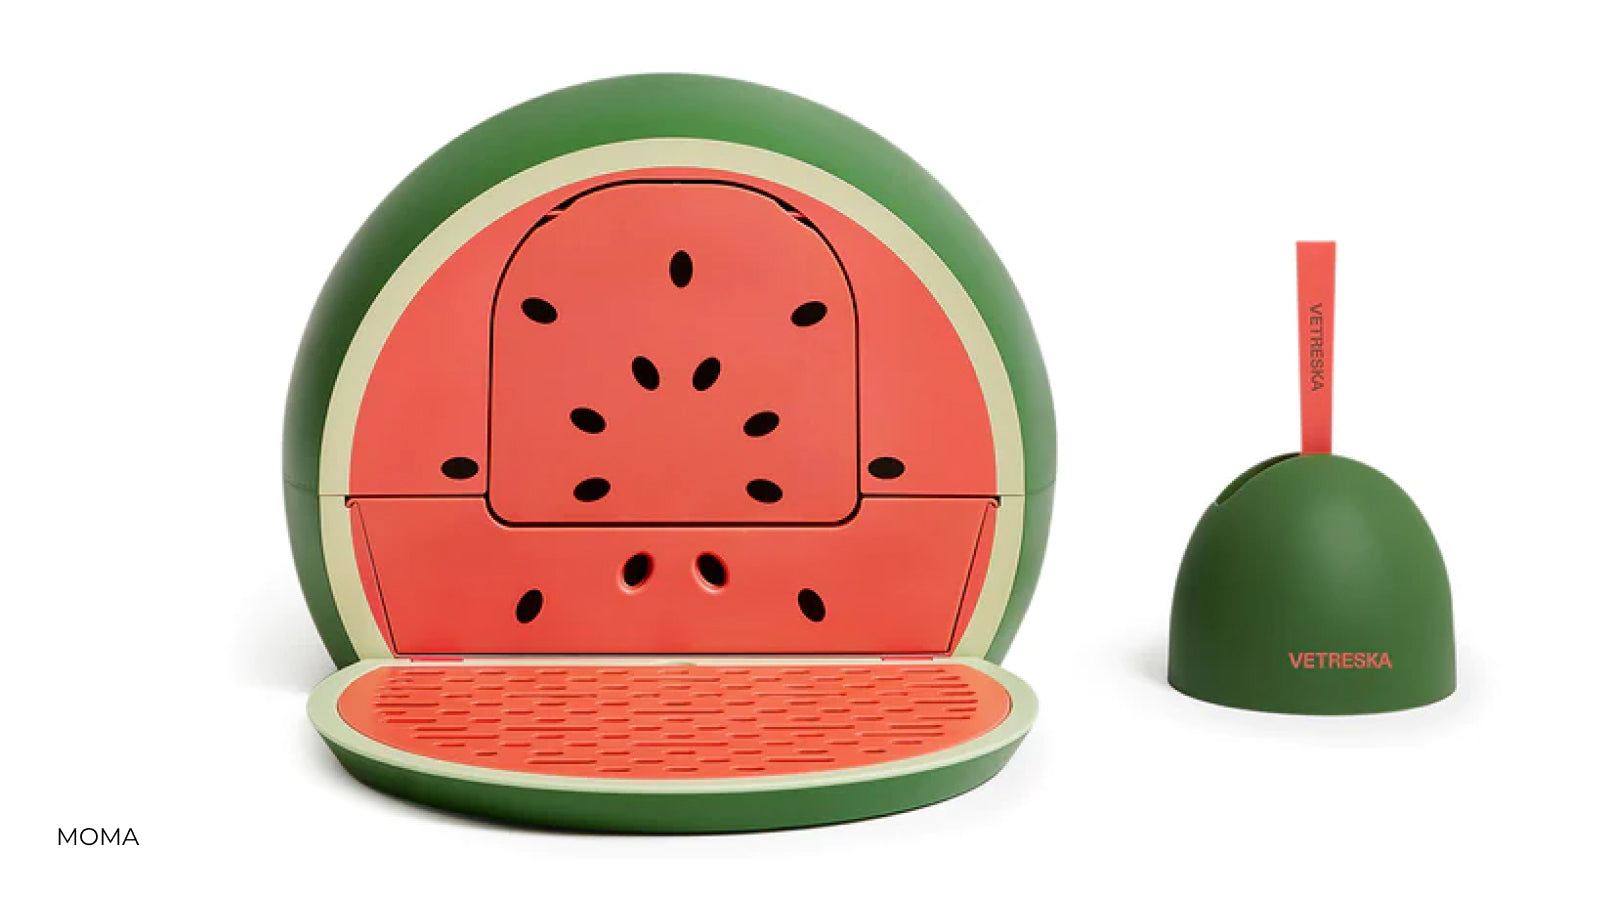 Watermelon shape kitty litter box